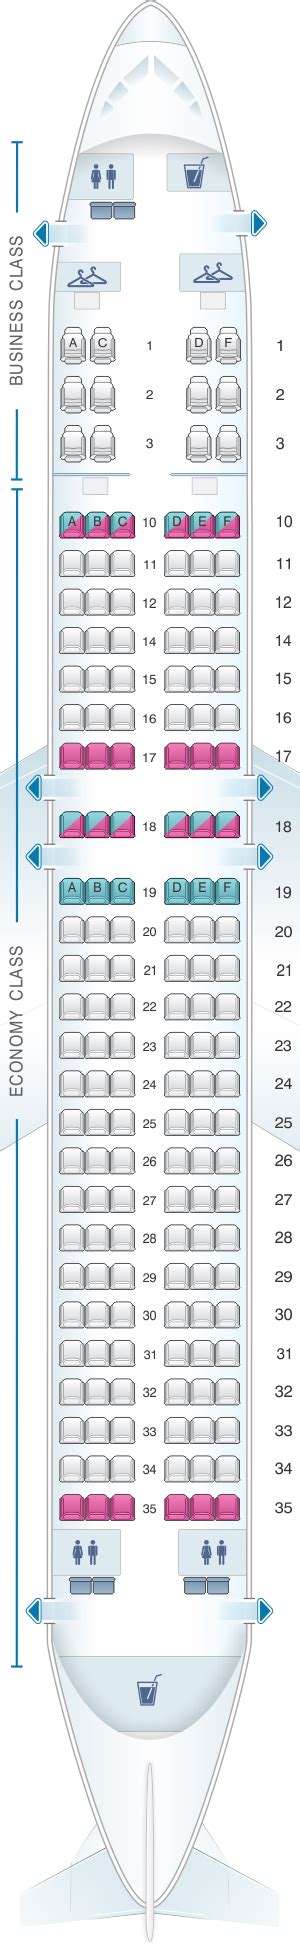 oman air 737-8 seat map